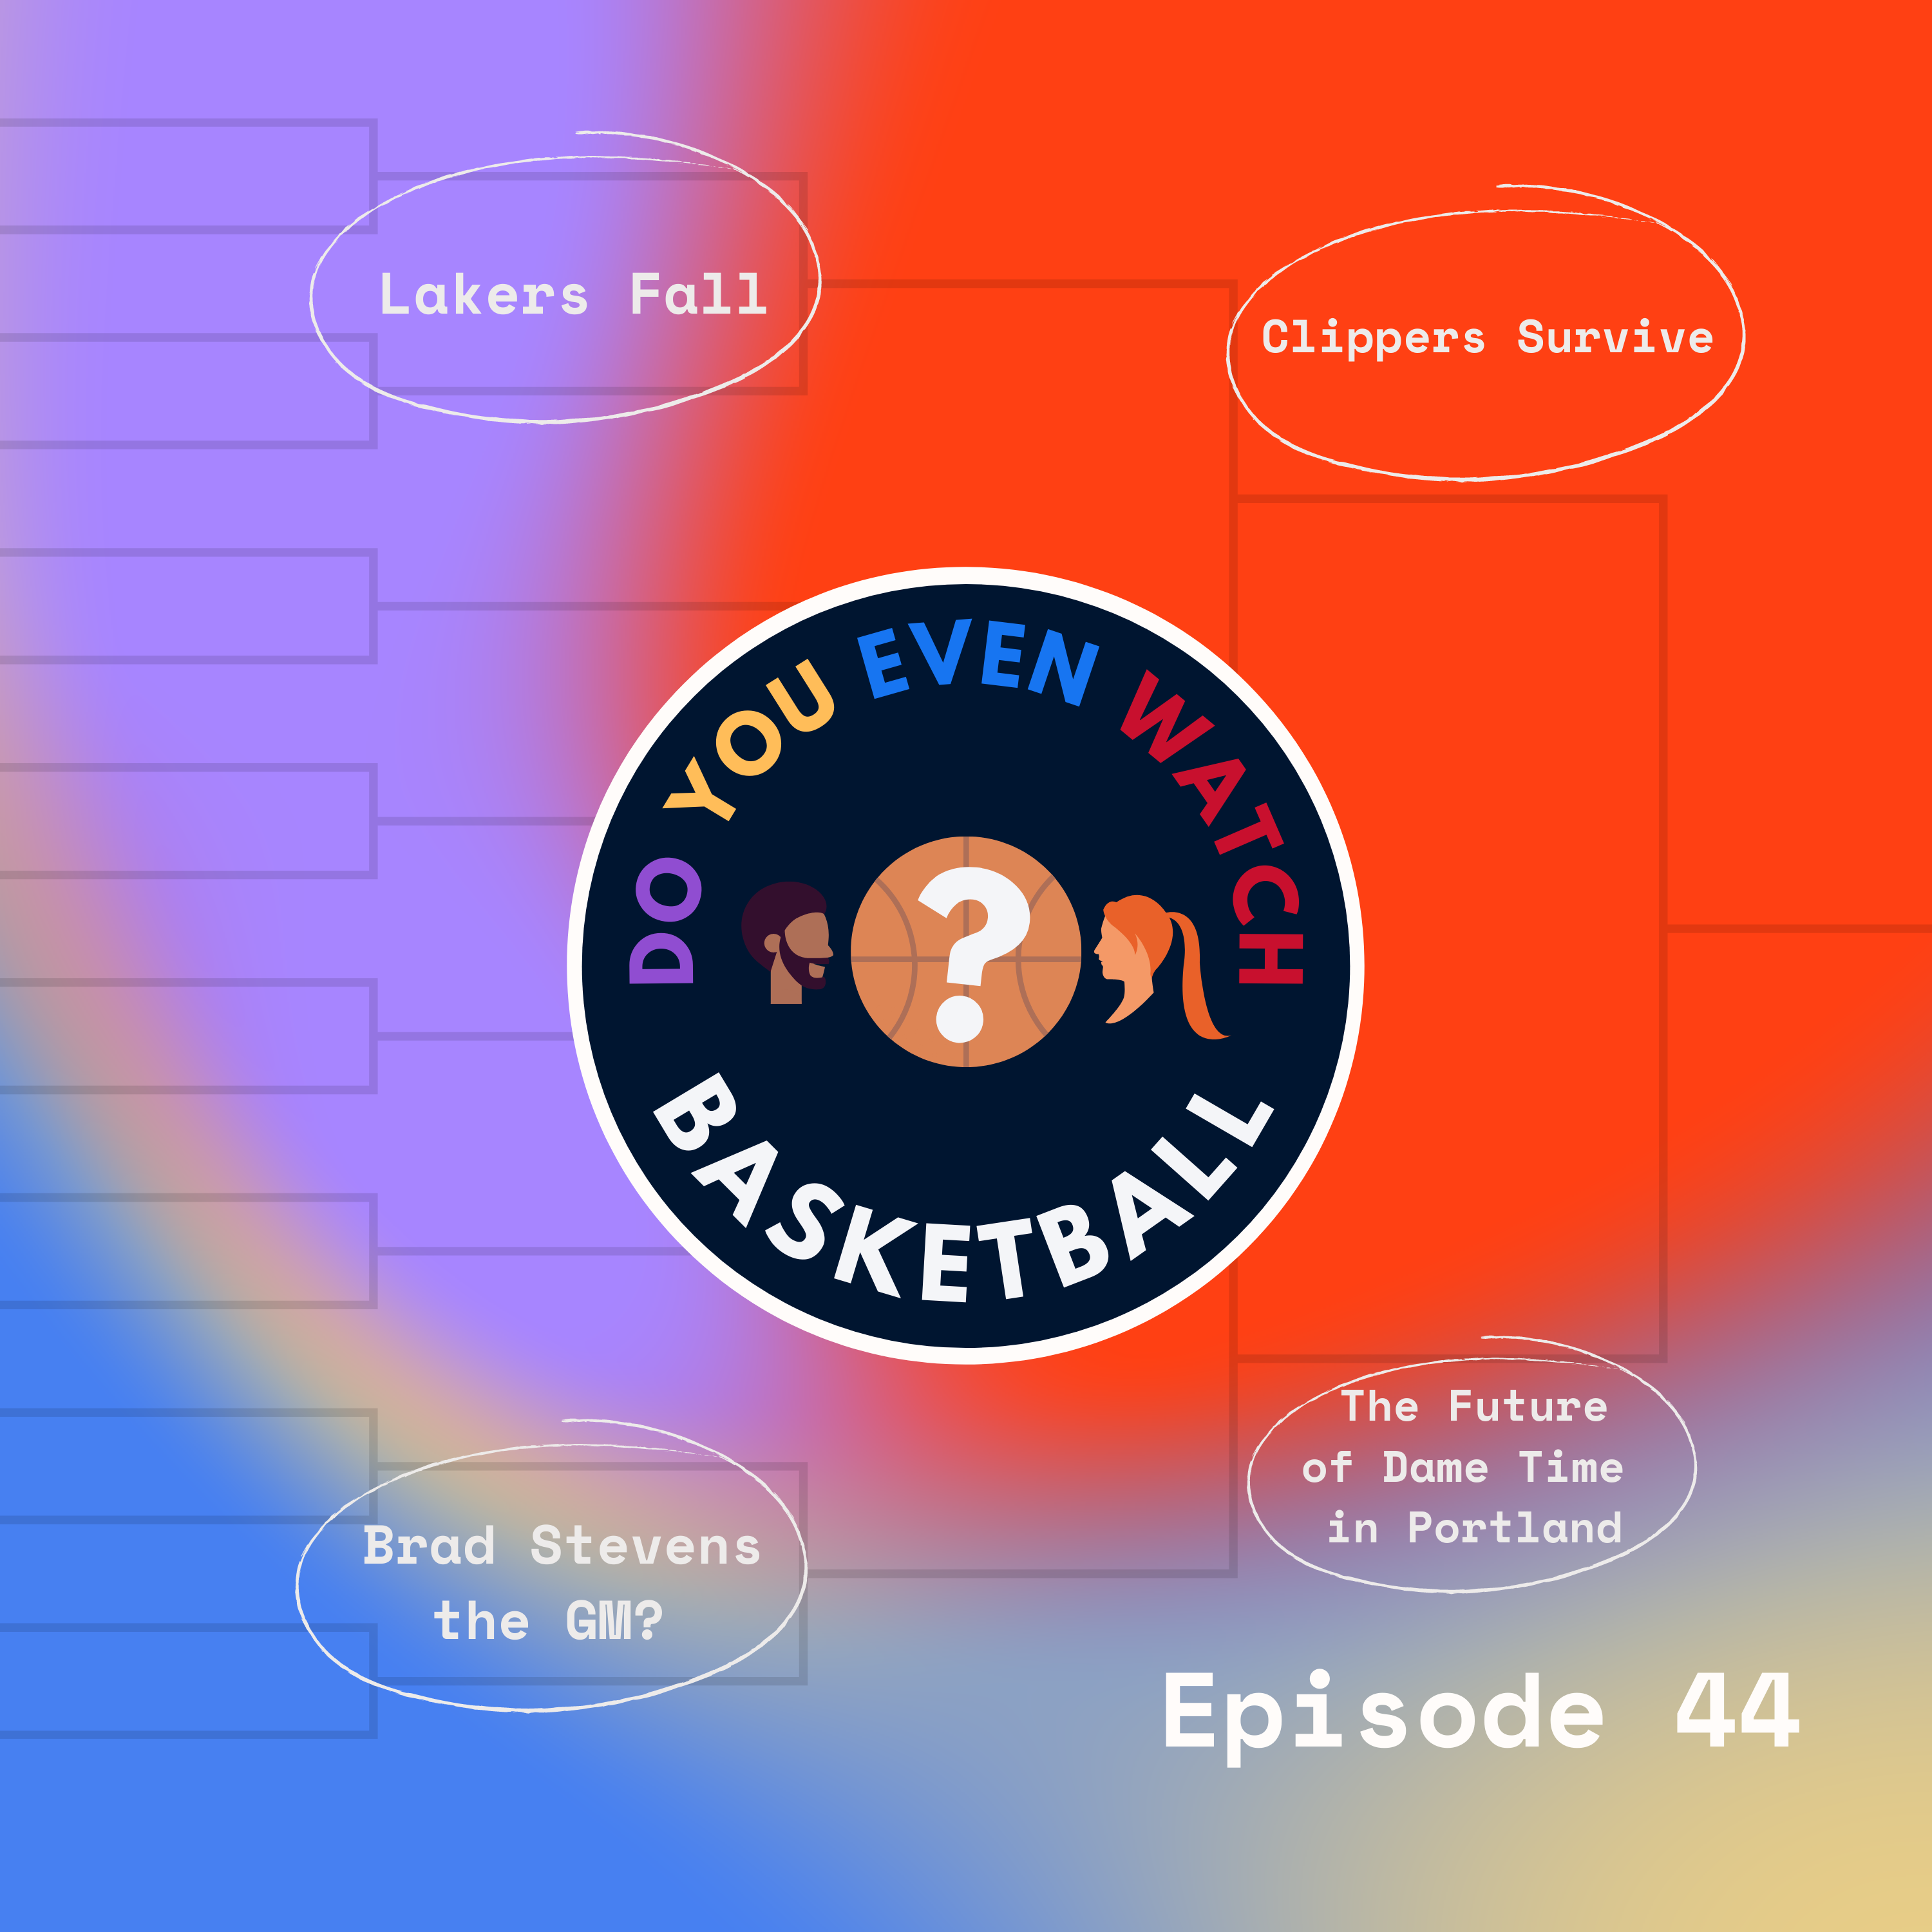 Artwork for podcast Do You Even Watch Basketball?